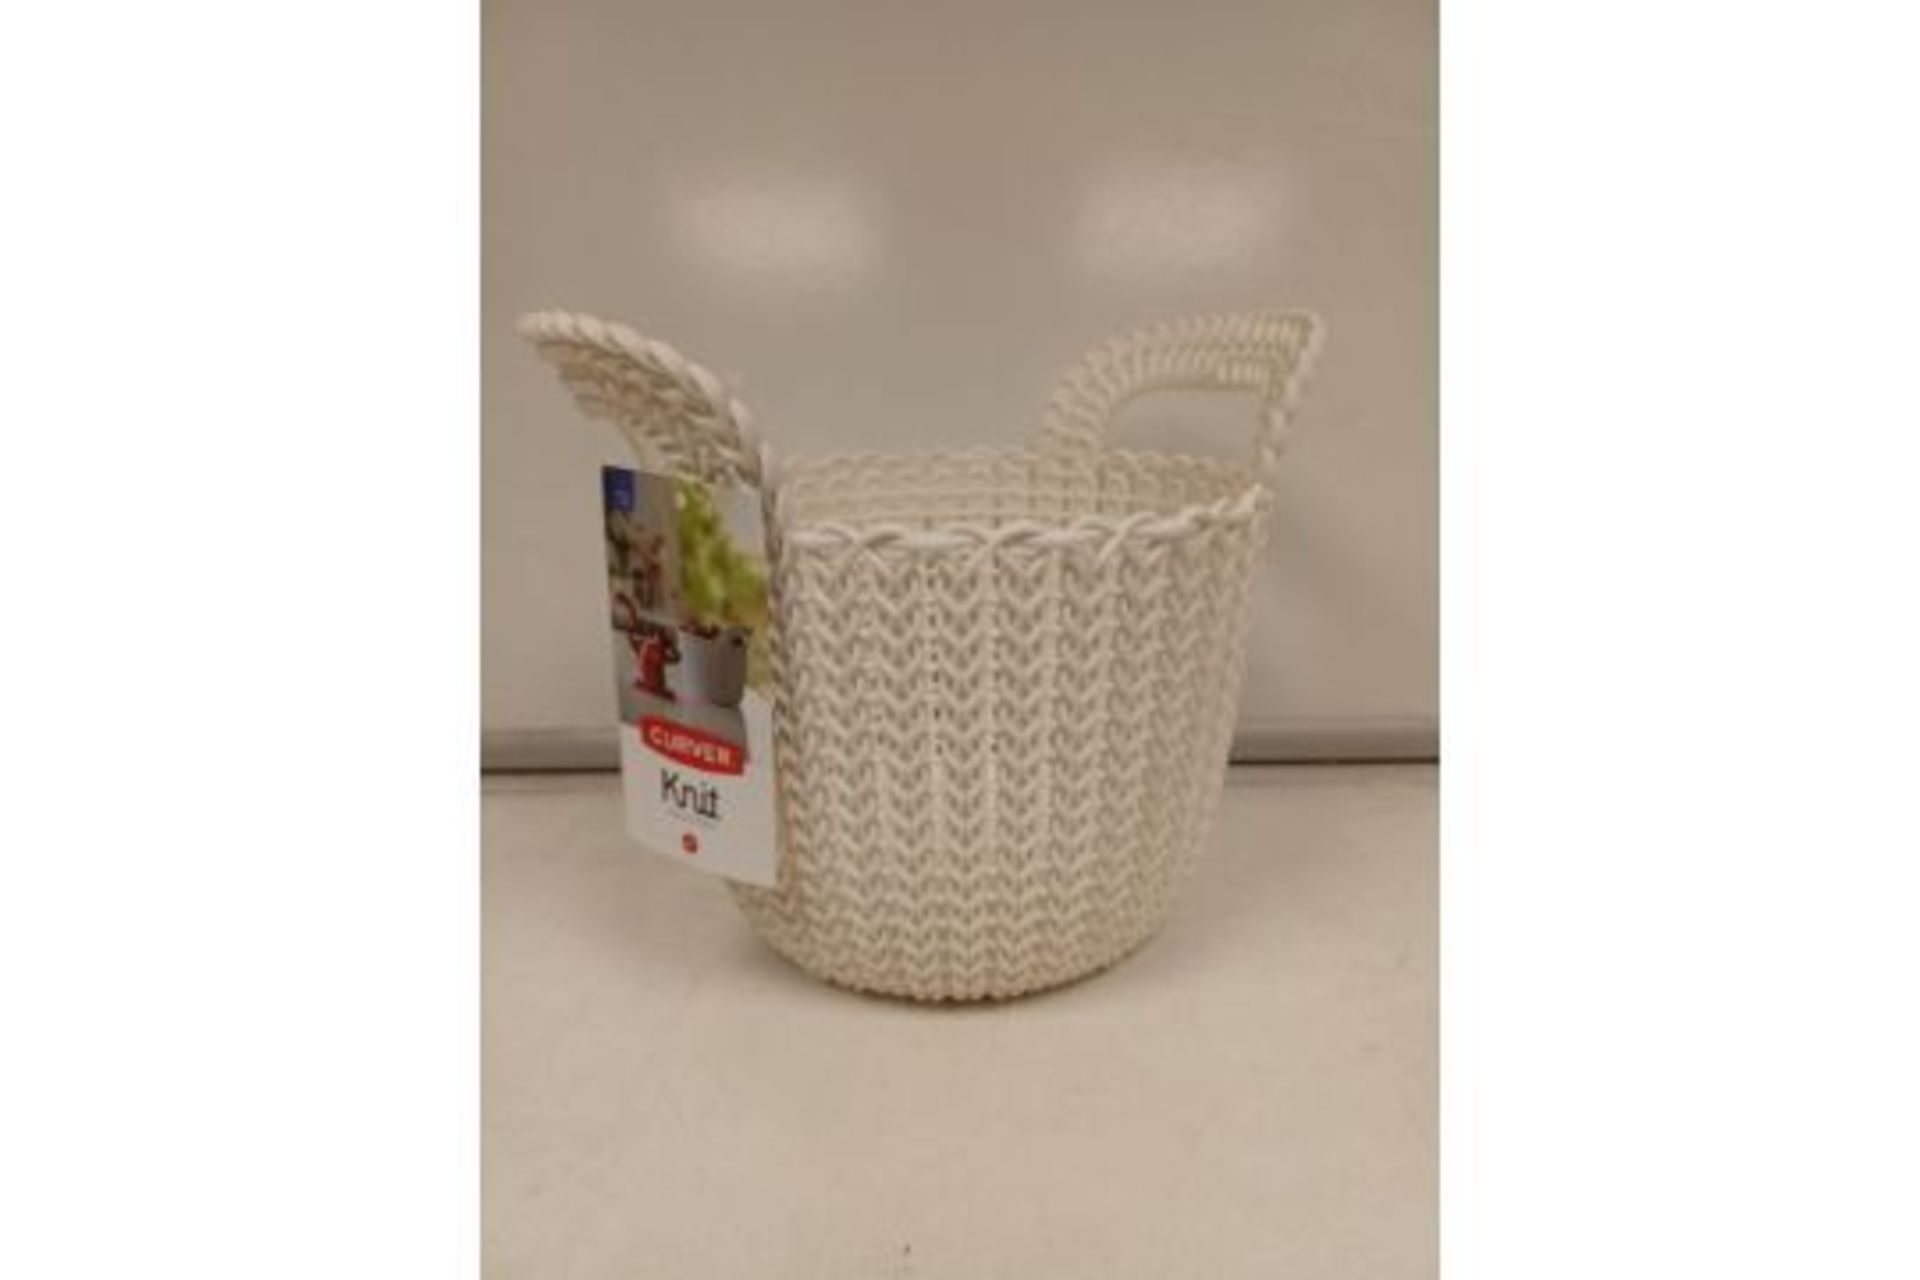 40 X NEW CURVER 226385 Plastic Off White Knit Round Basket 23 x 19 x 18.5 cm 3 Litres. 2 practical